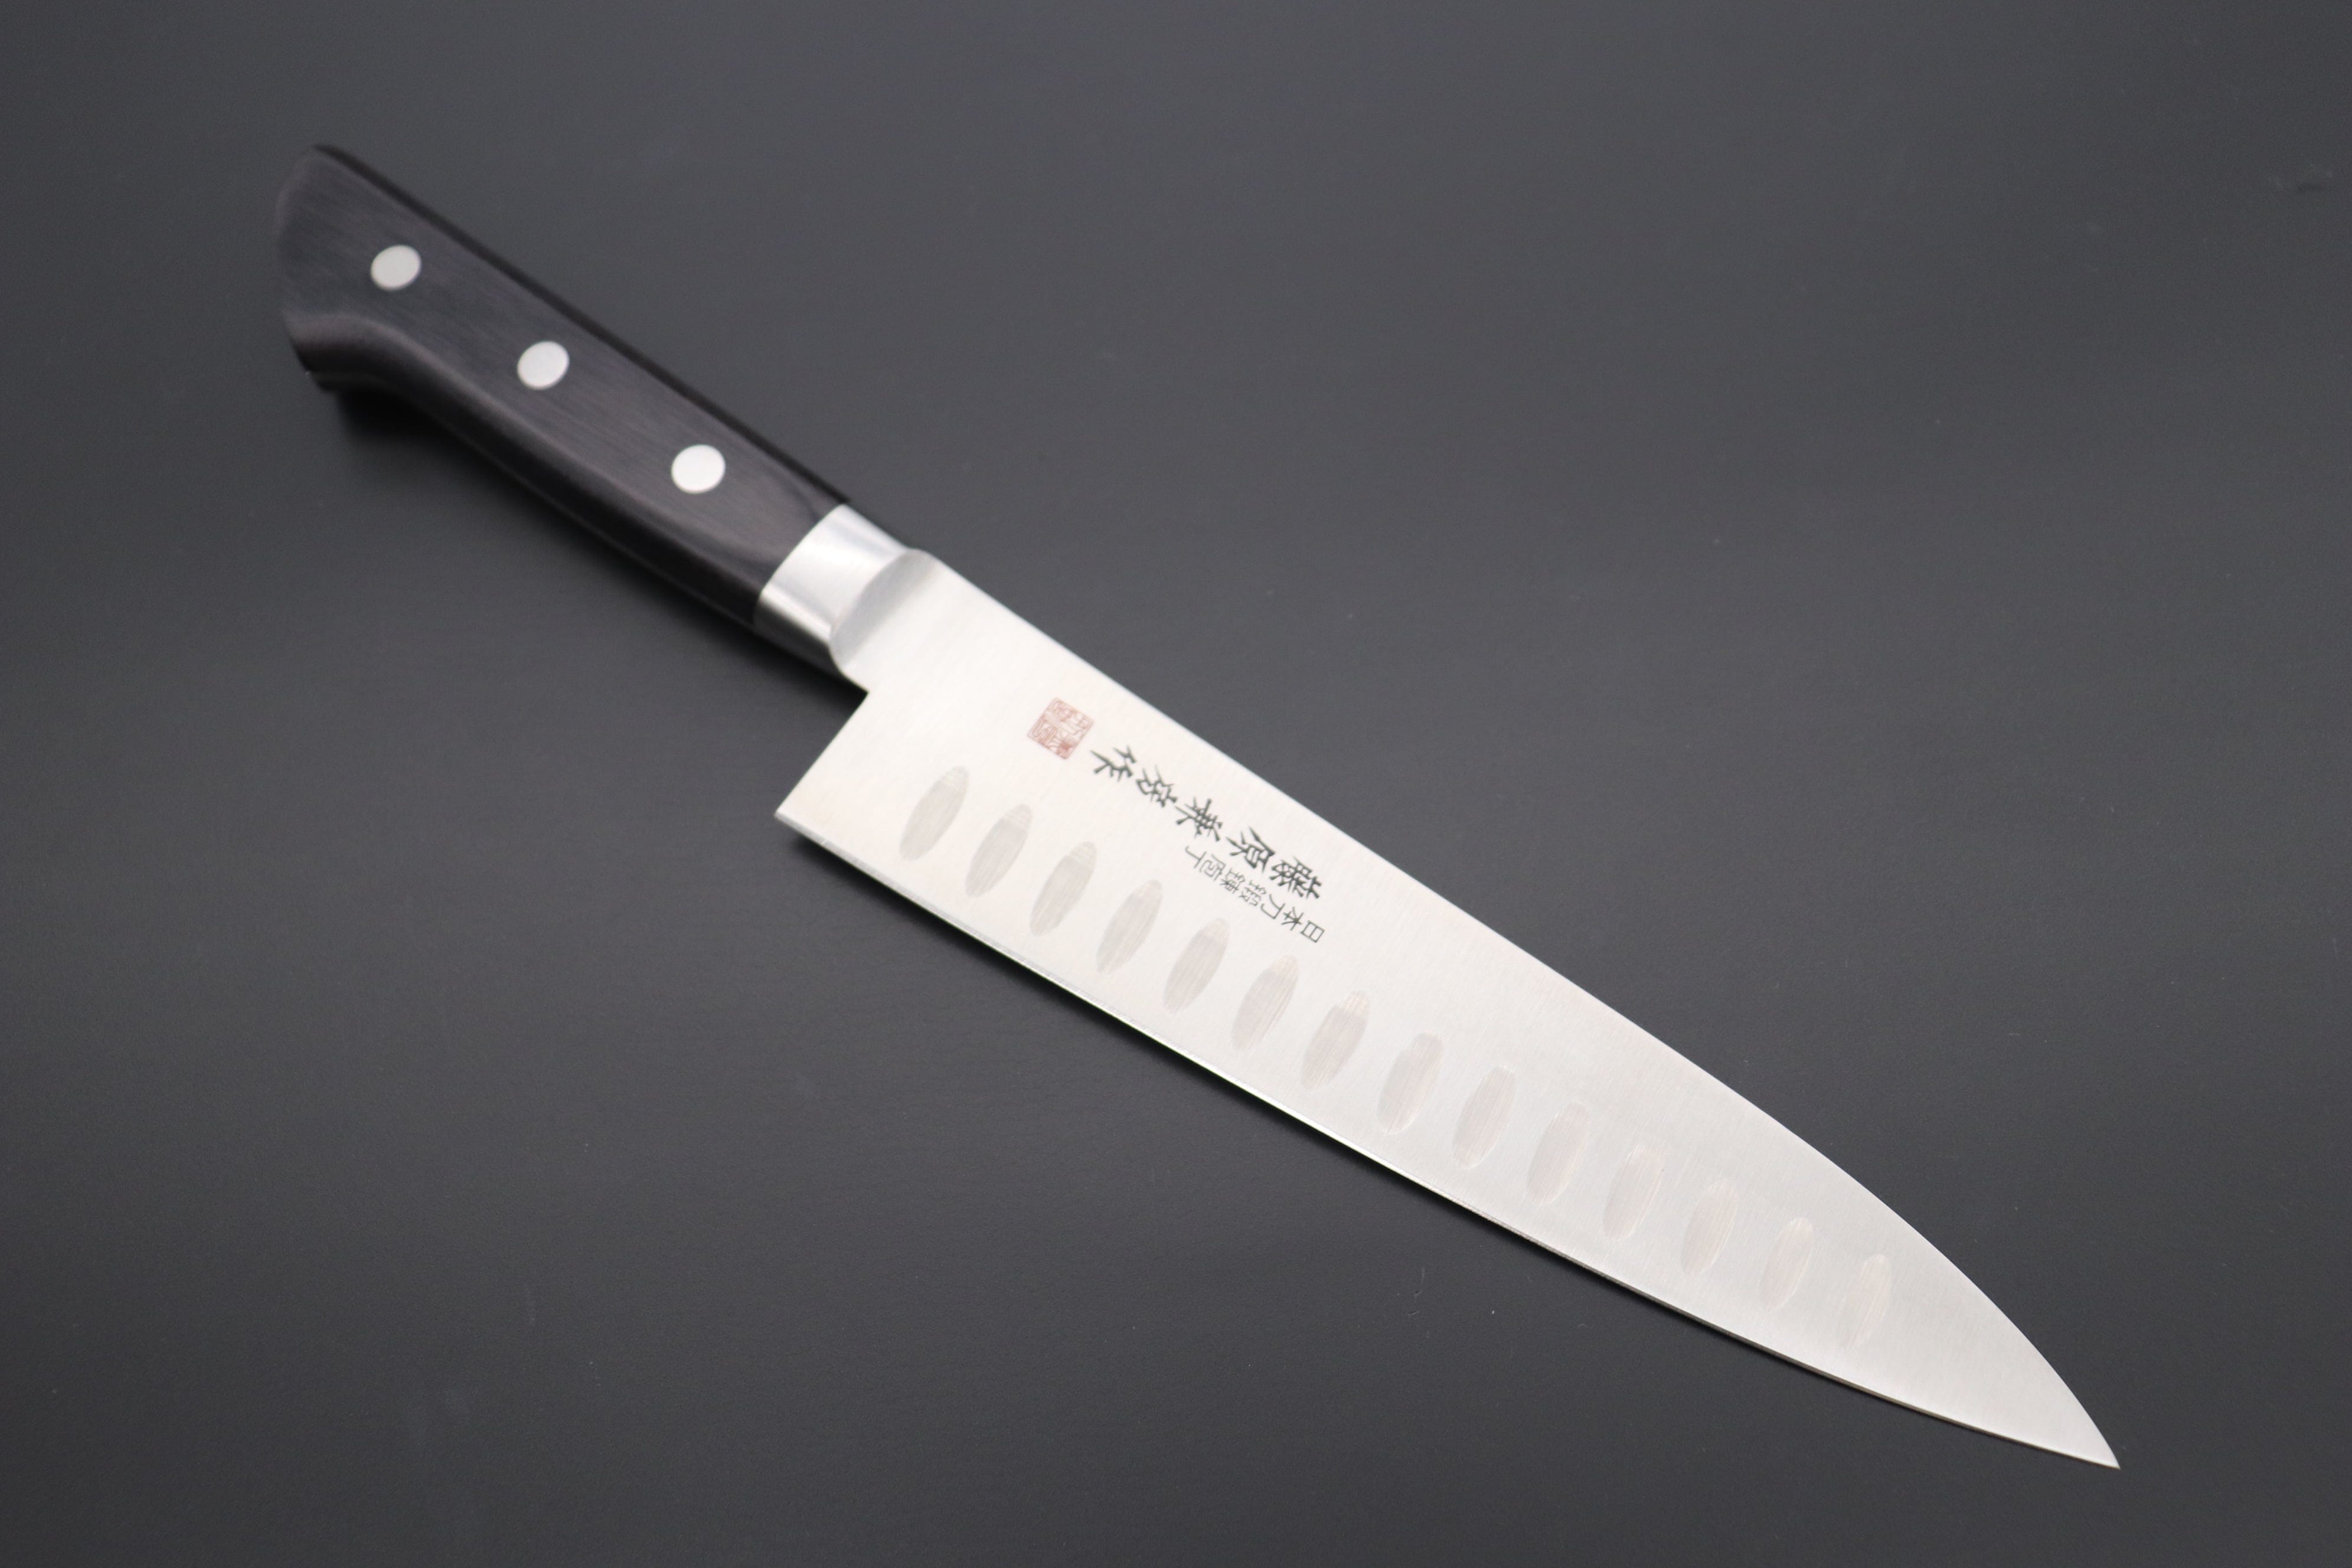  Mac Knife Series Hollow Edge Chef's Knife, 8-Inch, 8